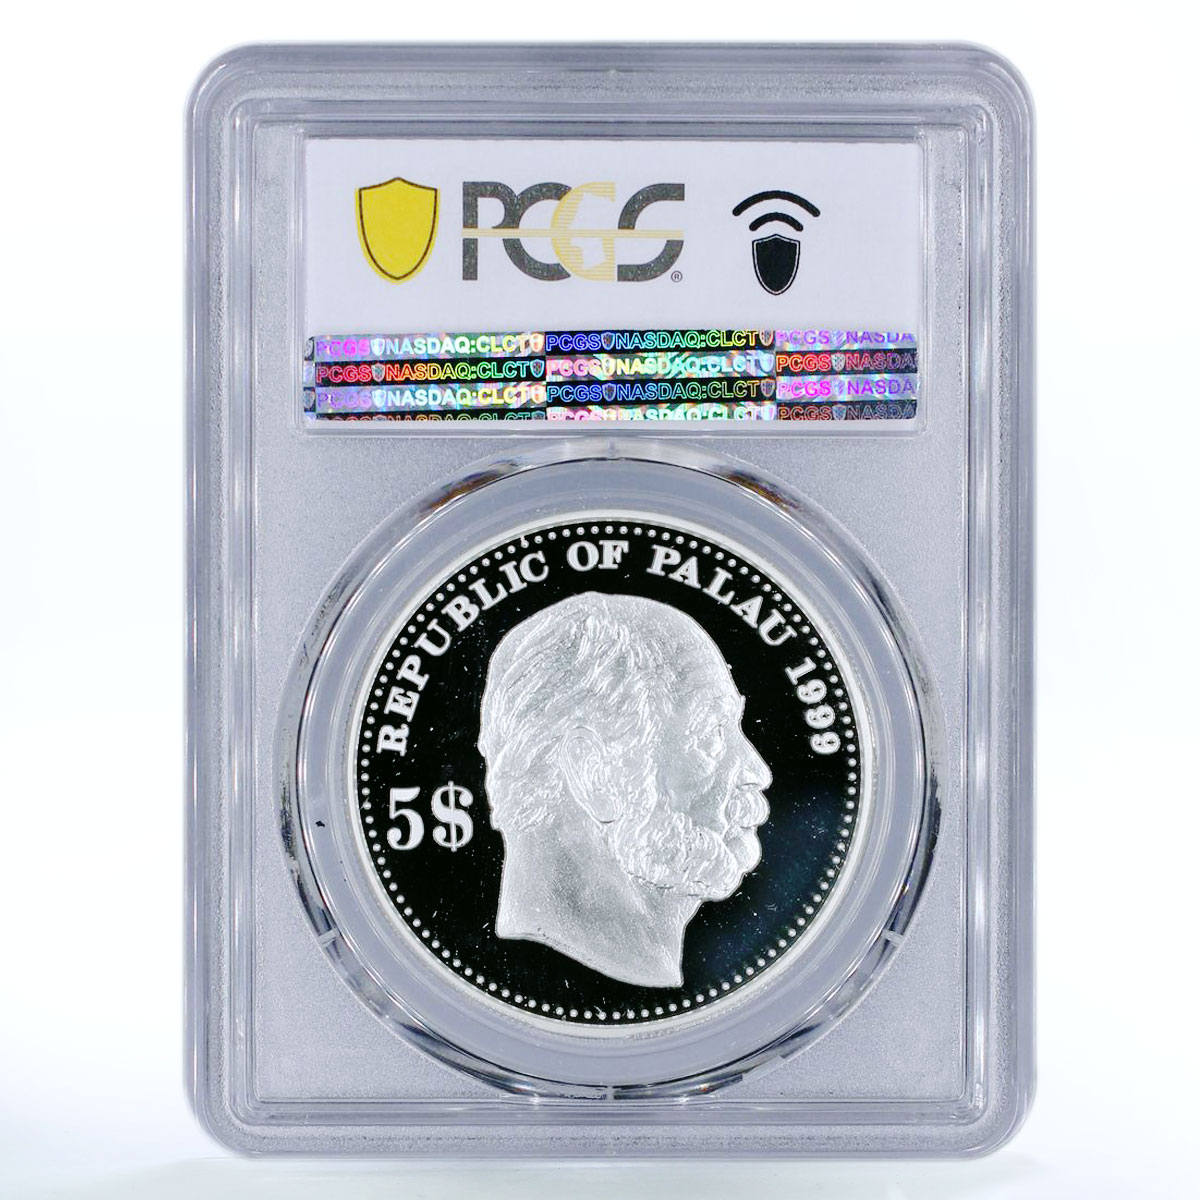 Palau 5 dollars German Cameroon PR70 PCGS silver coin 1999